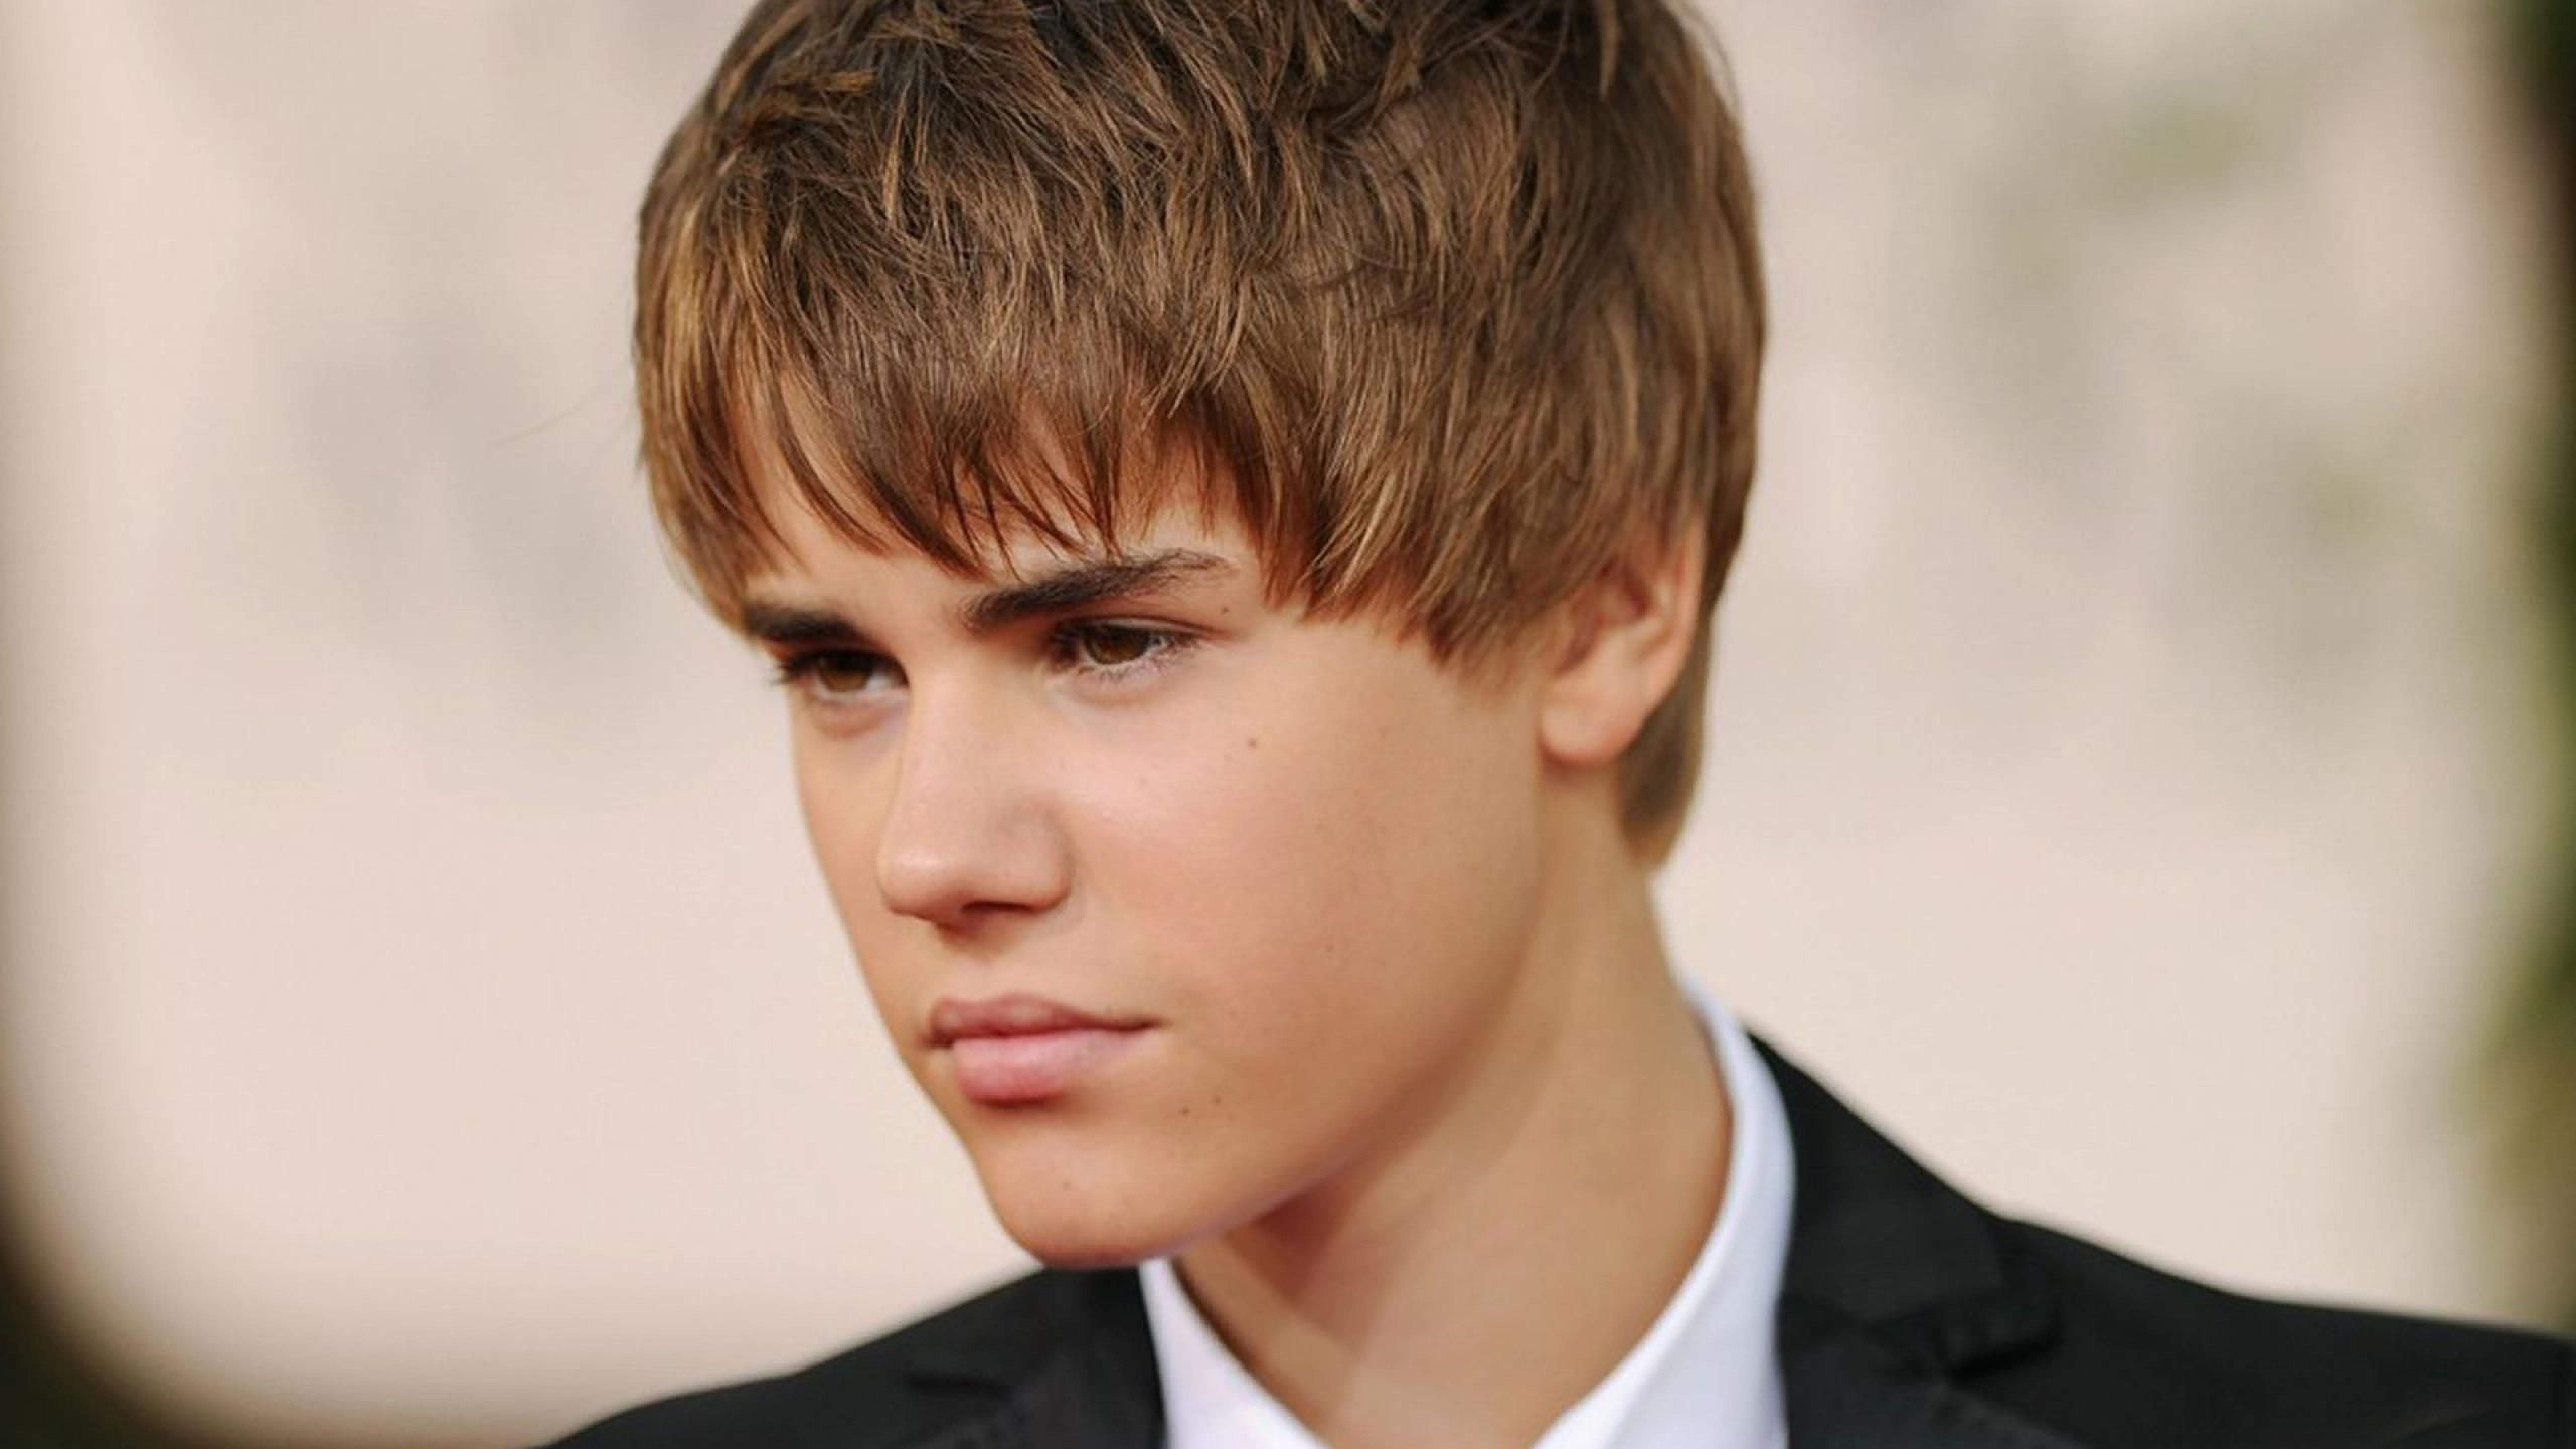 Justin Bieber HD wallpaper 8K Wallpaper, HD Celebrities 4K Wallpaper, Image, Photo and Background